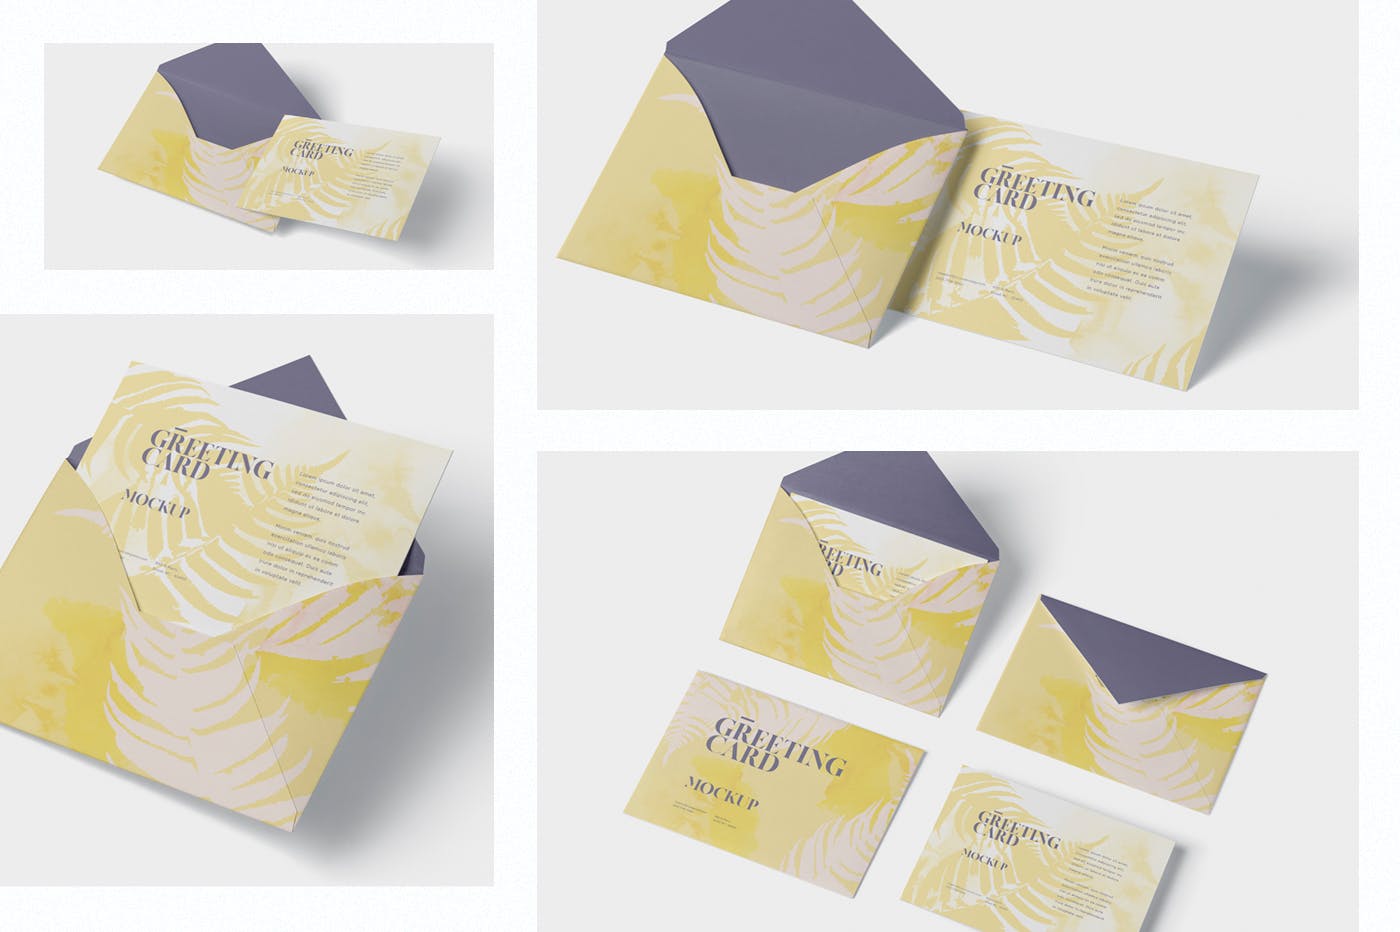 高端企业信封&贺卡设计图第一素材精选 Greeting Card Mockup with Envelope – A6 Size插图(1)